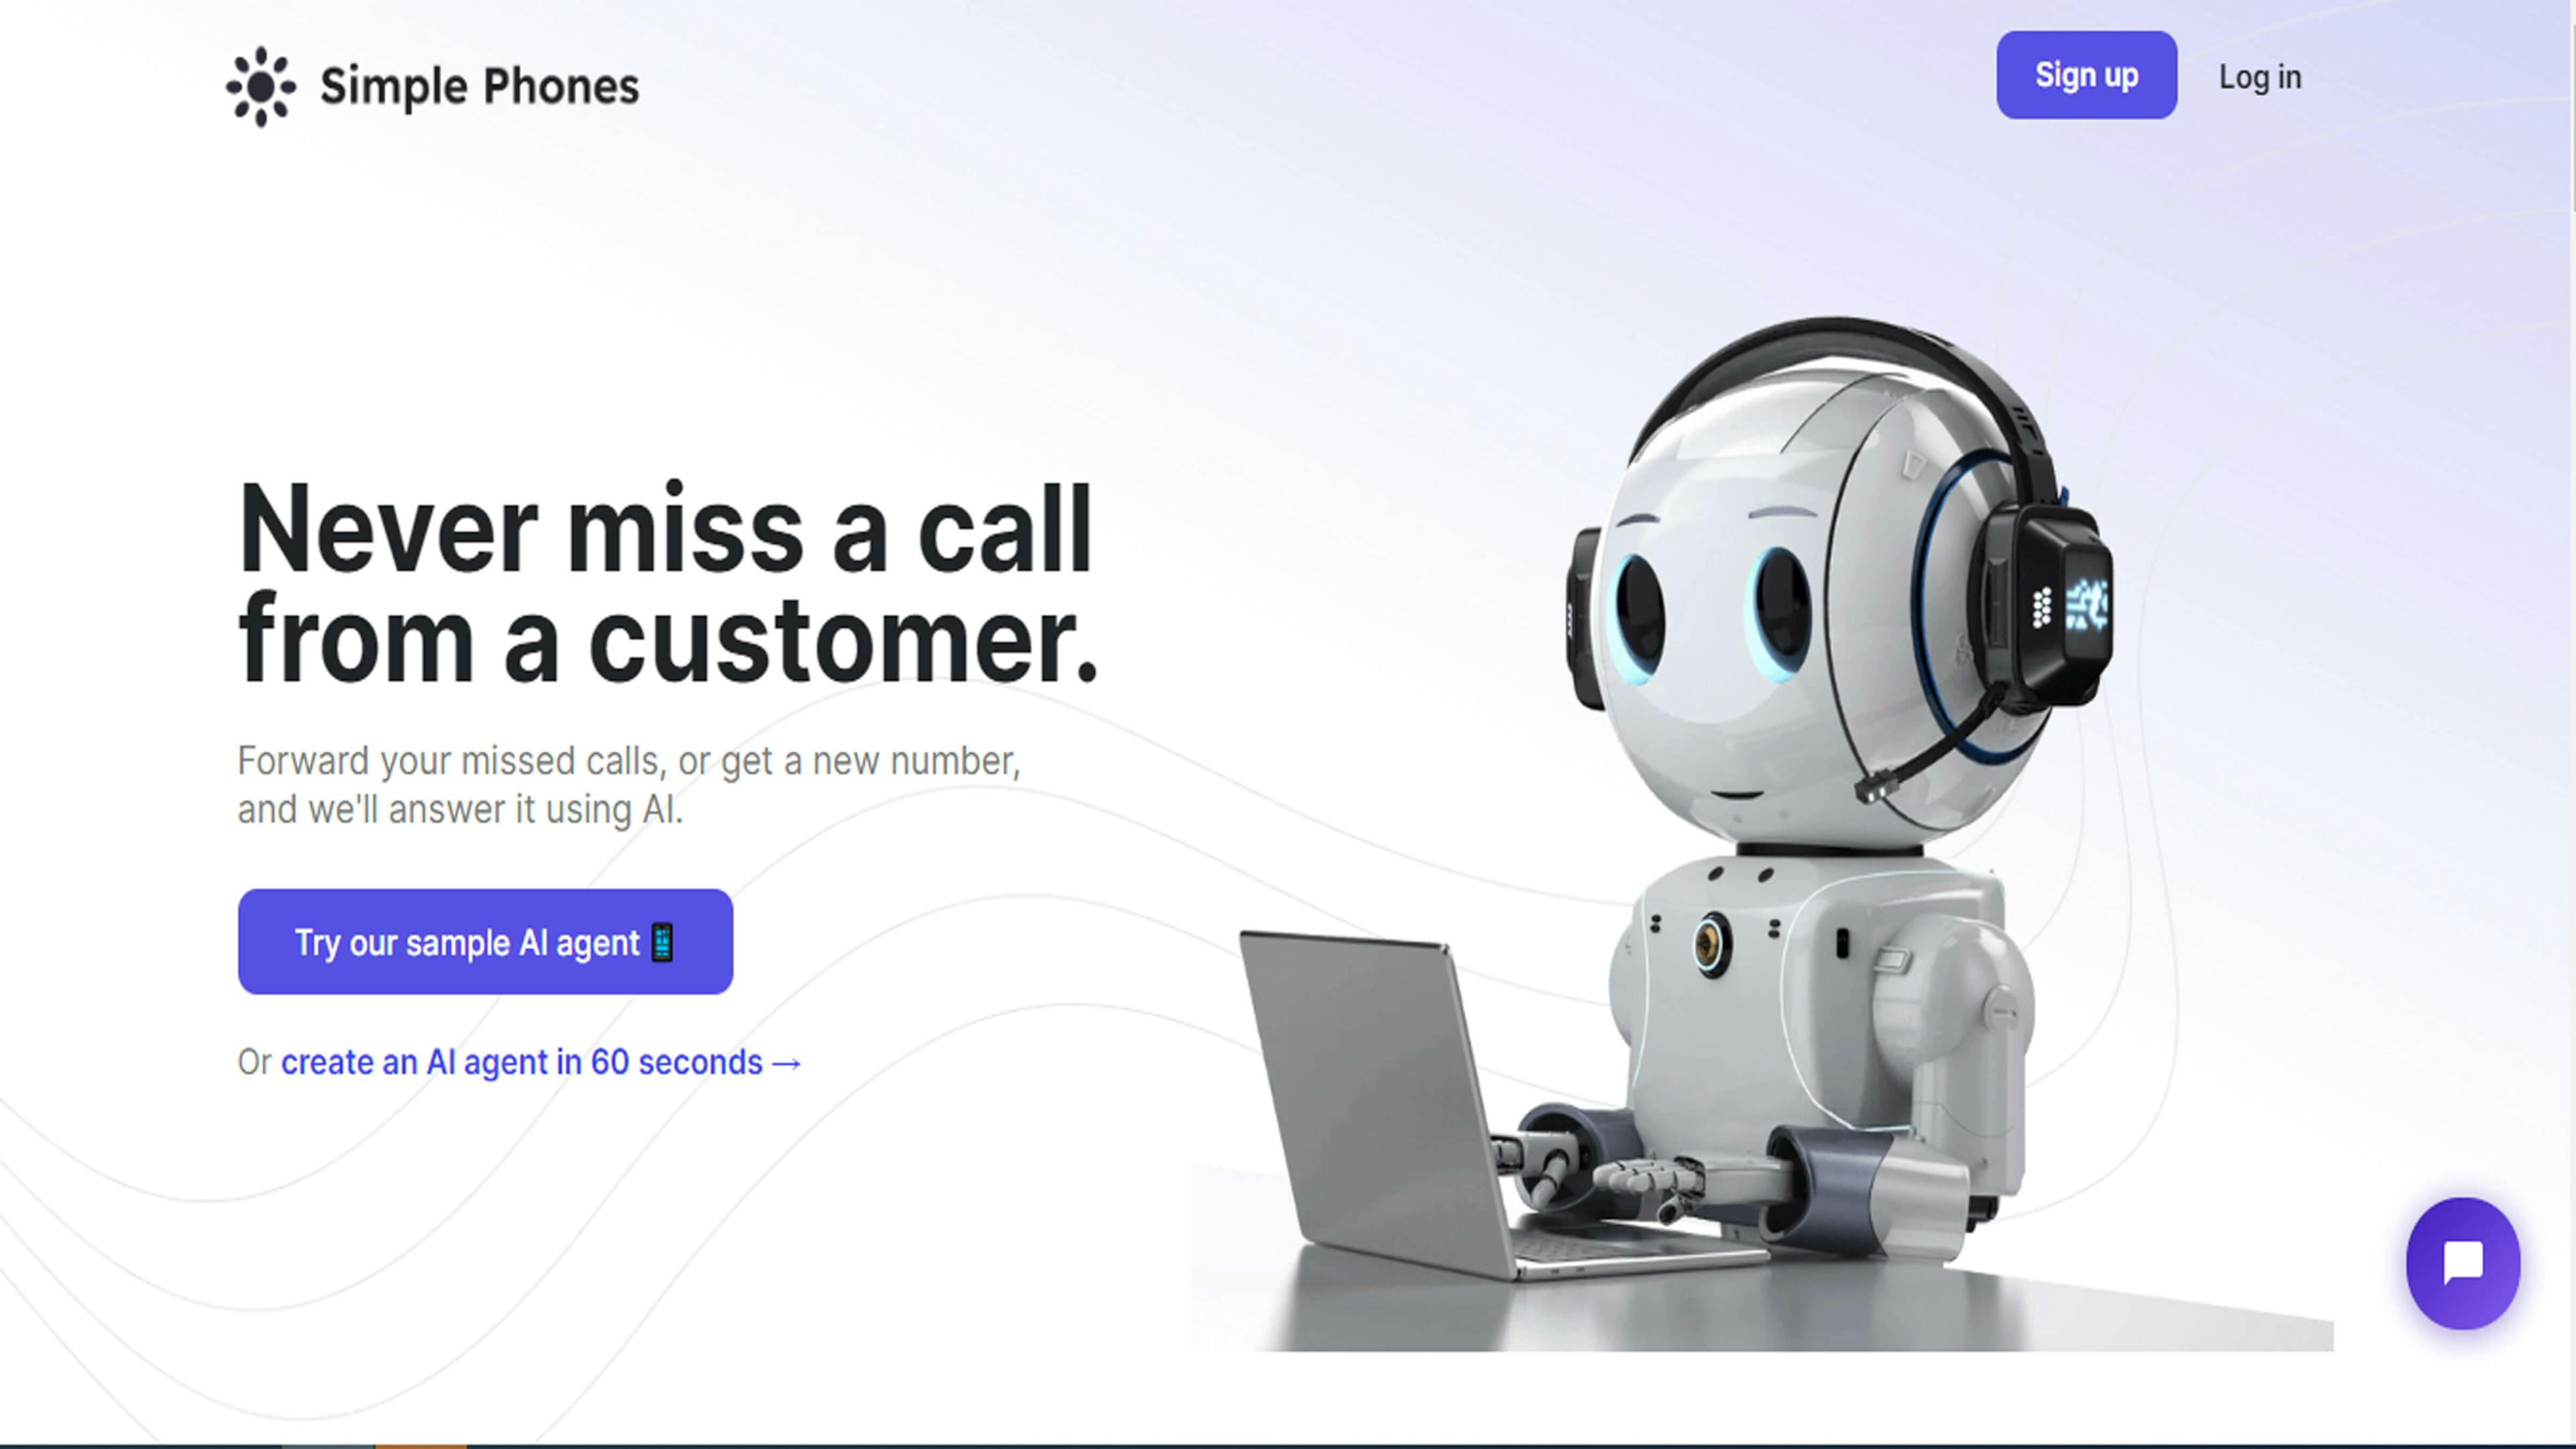 Never miss a call, AI that talks smart